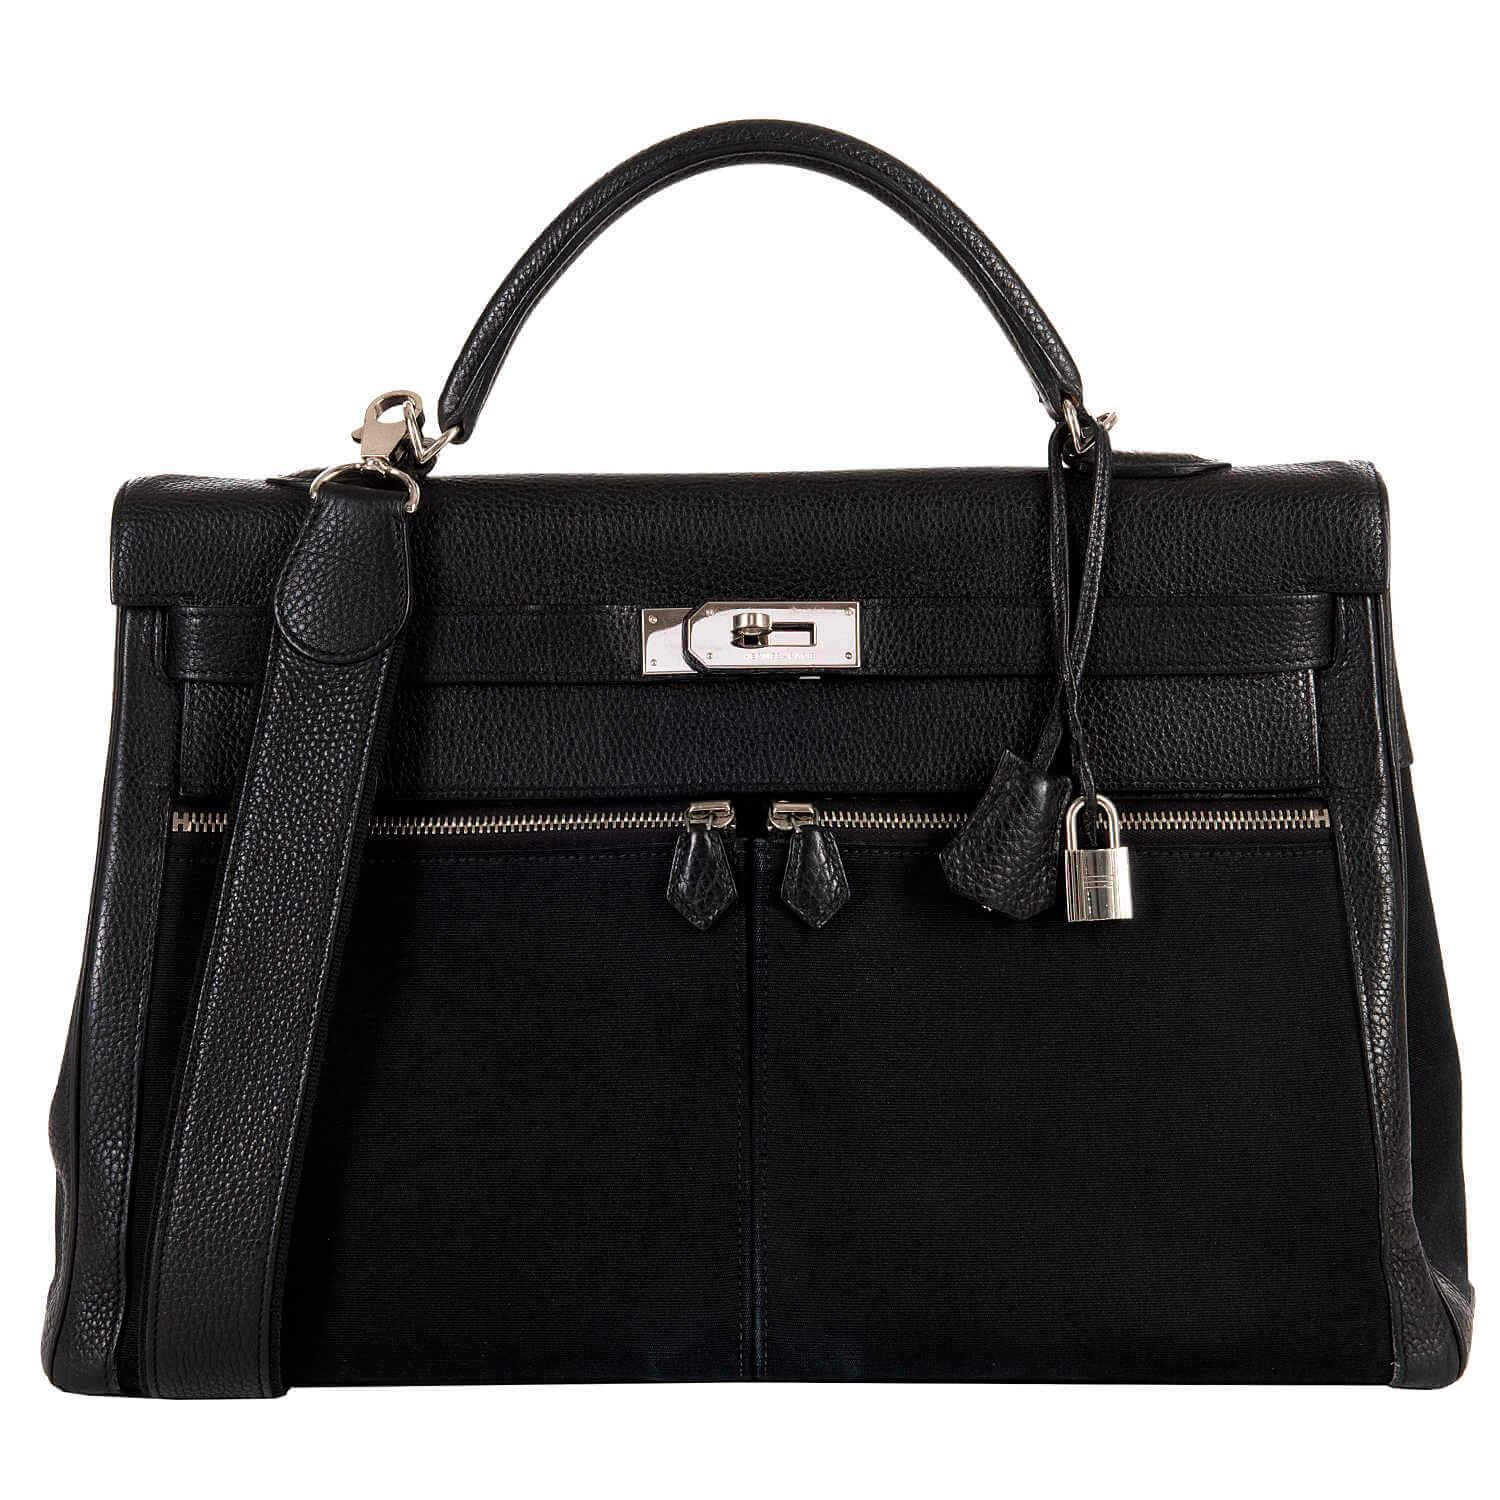 Rare Hermes 40cm Black on Black kelly 'Lakis' Bag with Palladium Hardware